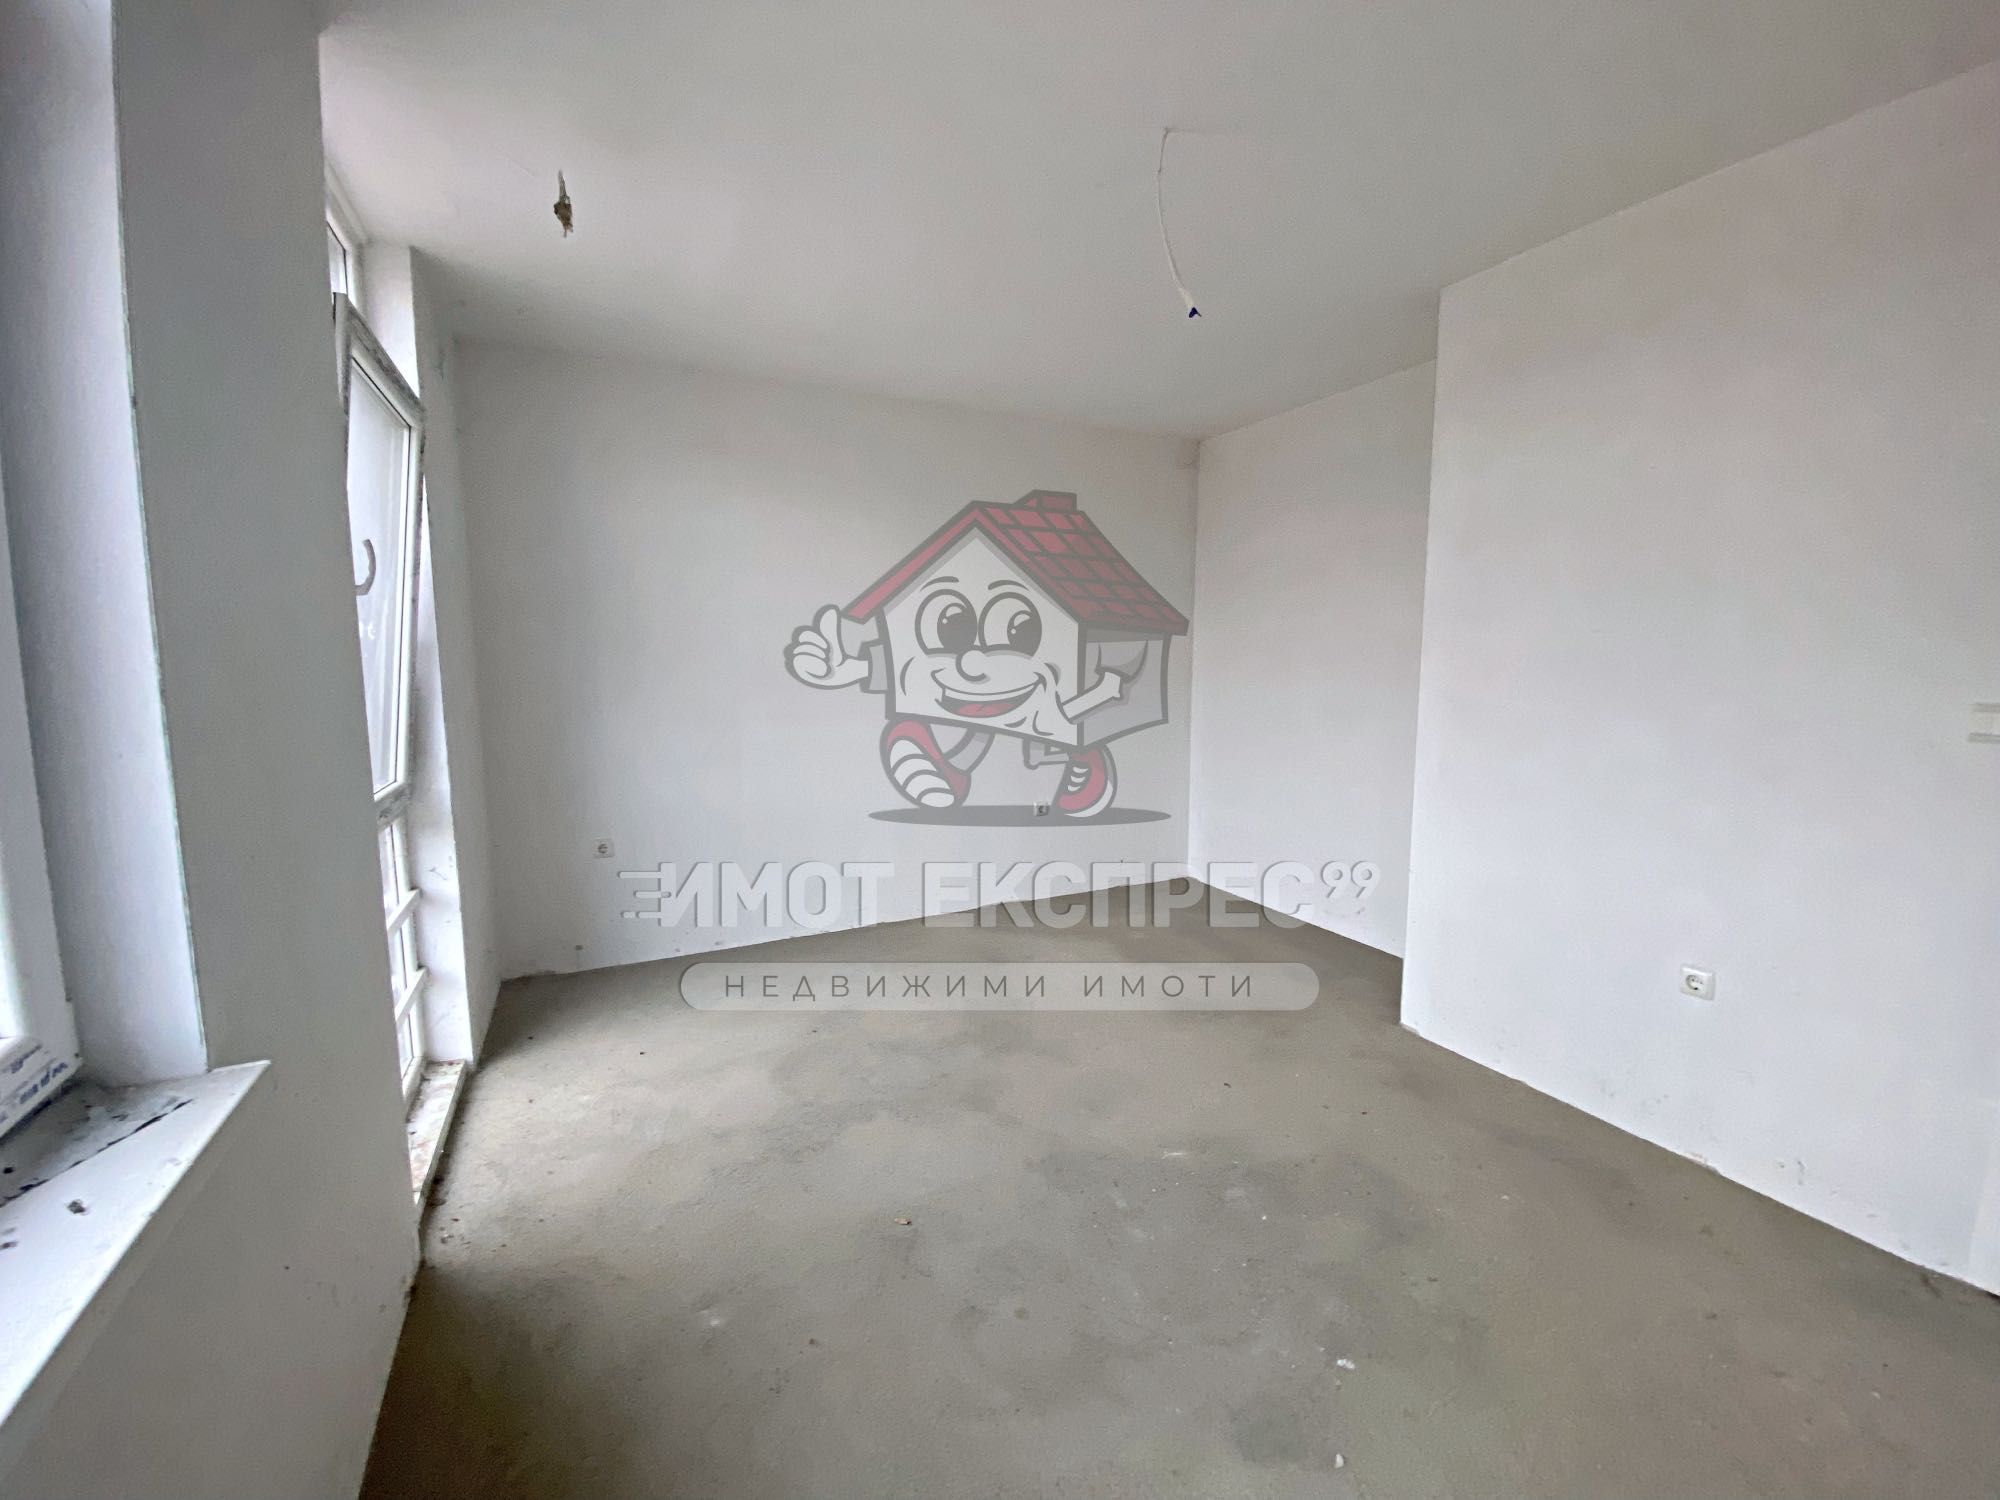 Тристаен апартамент, ново строителство, Акт 16, до Мол Пловдив